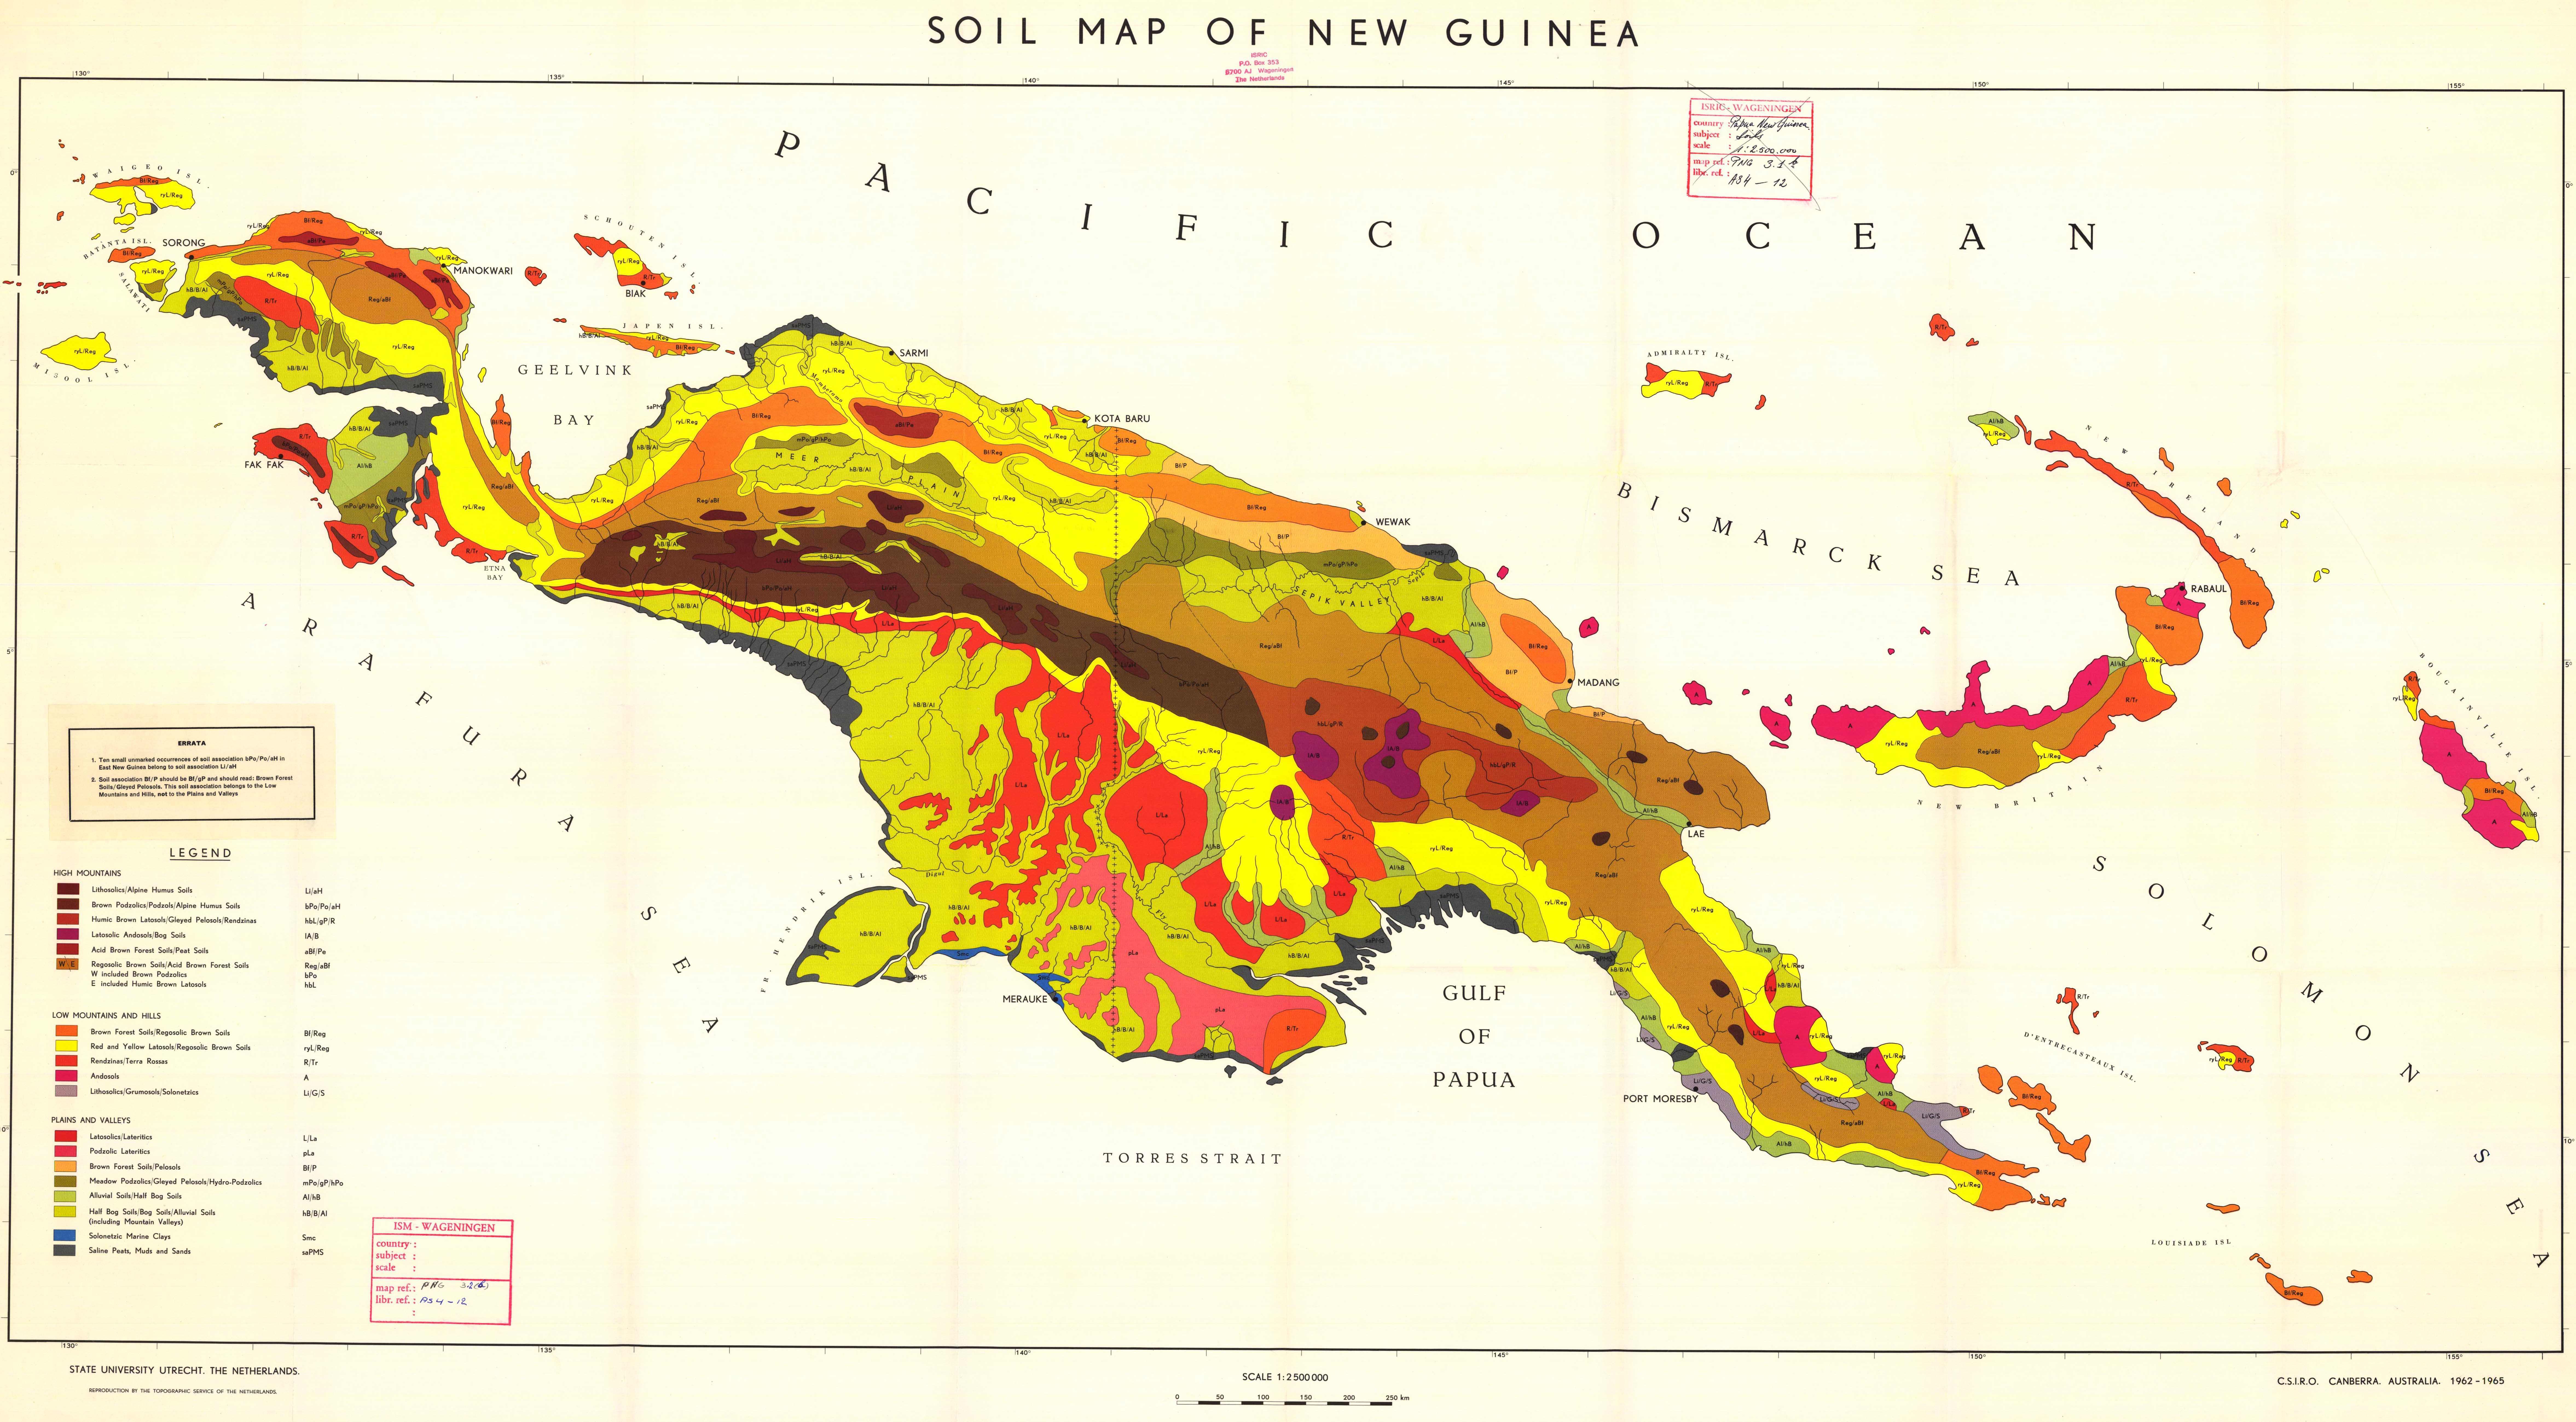 (New Guinea New Guinea)